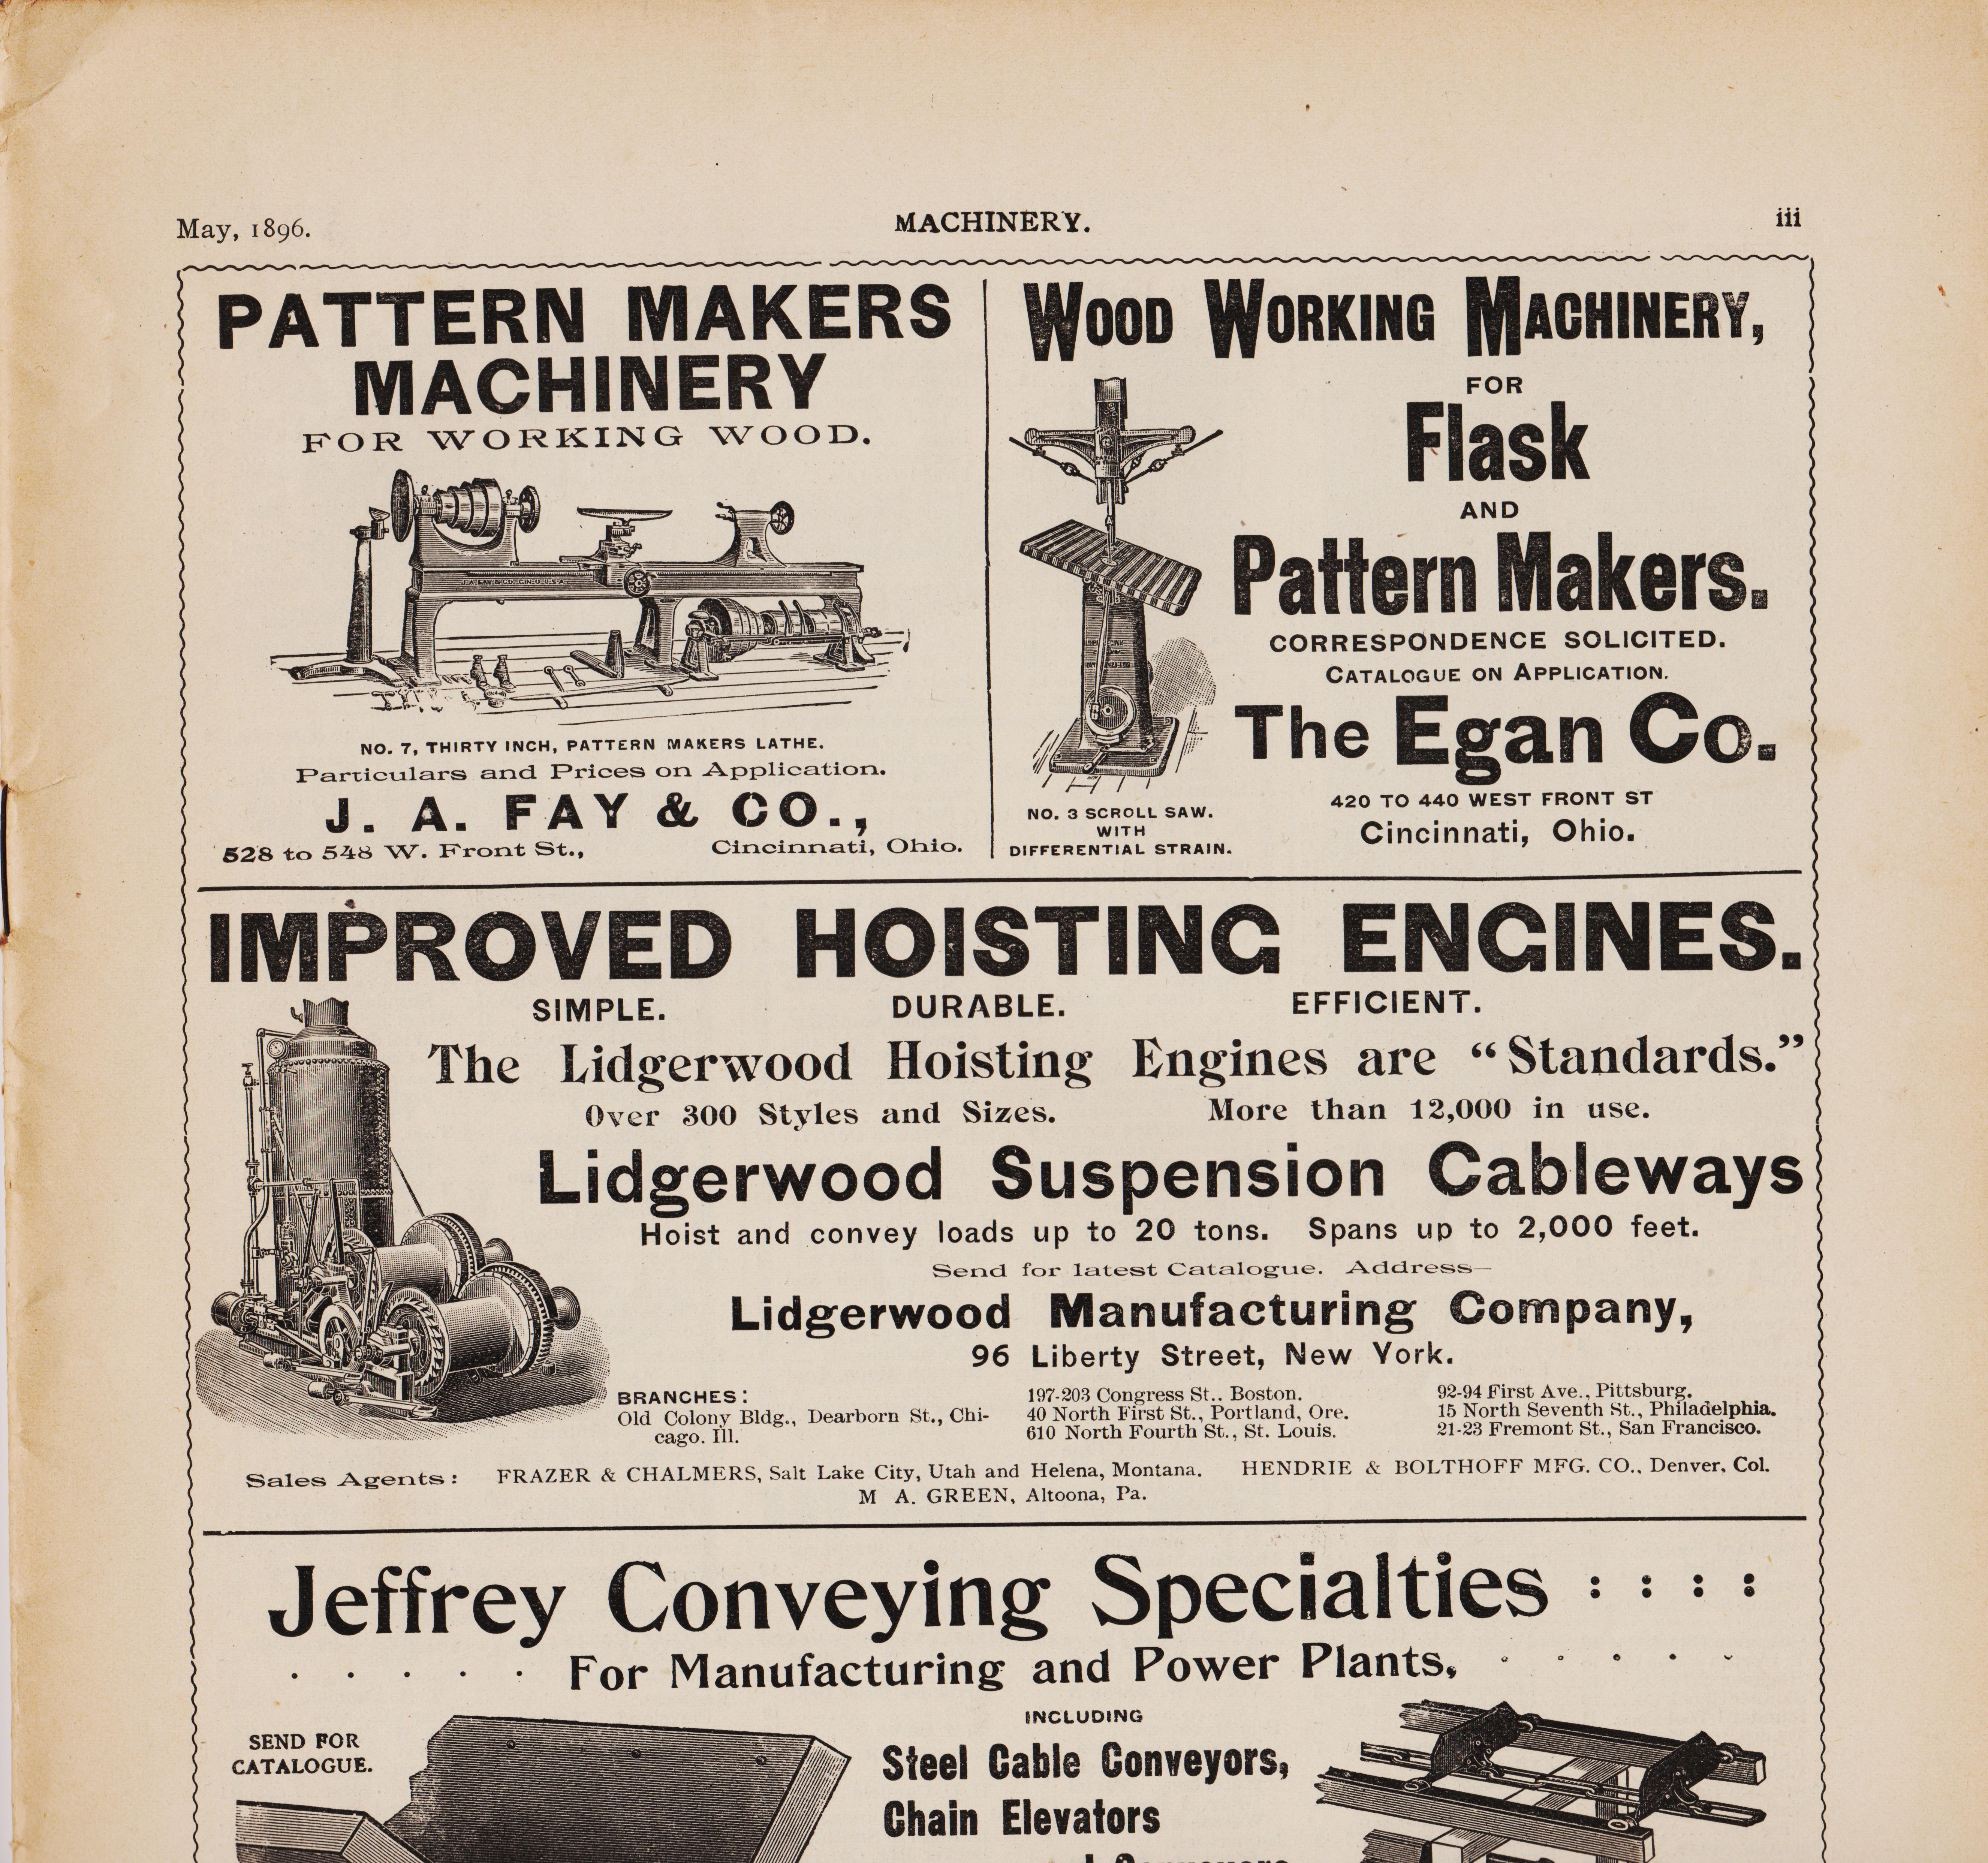 http://antiquemachinery.com/images-2019/American-Machinist-May-1896-vol-2-no-9-pg-iii-top-Toledo-Egan-J-A-Fay-Co-Wood-Working-Pattern-Lingerwood-.jpg